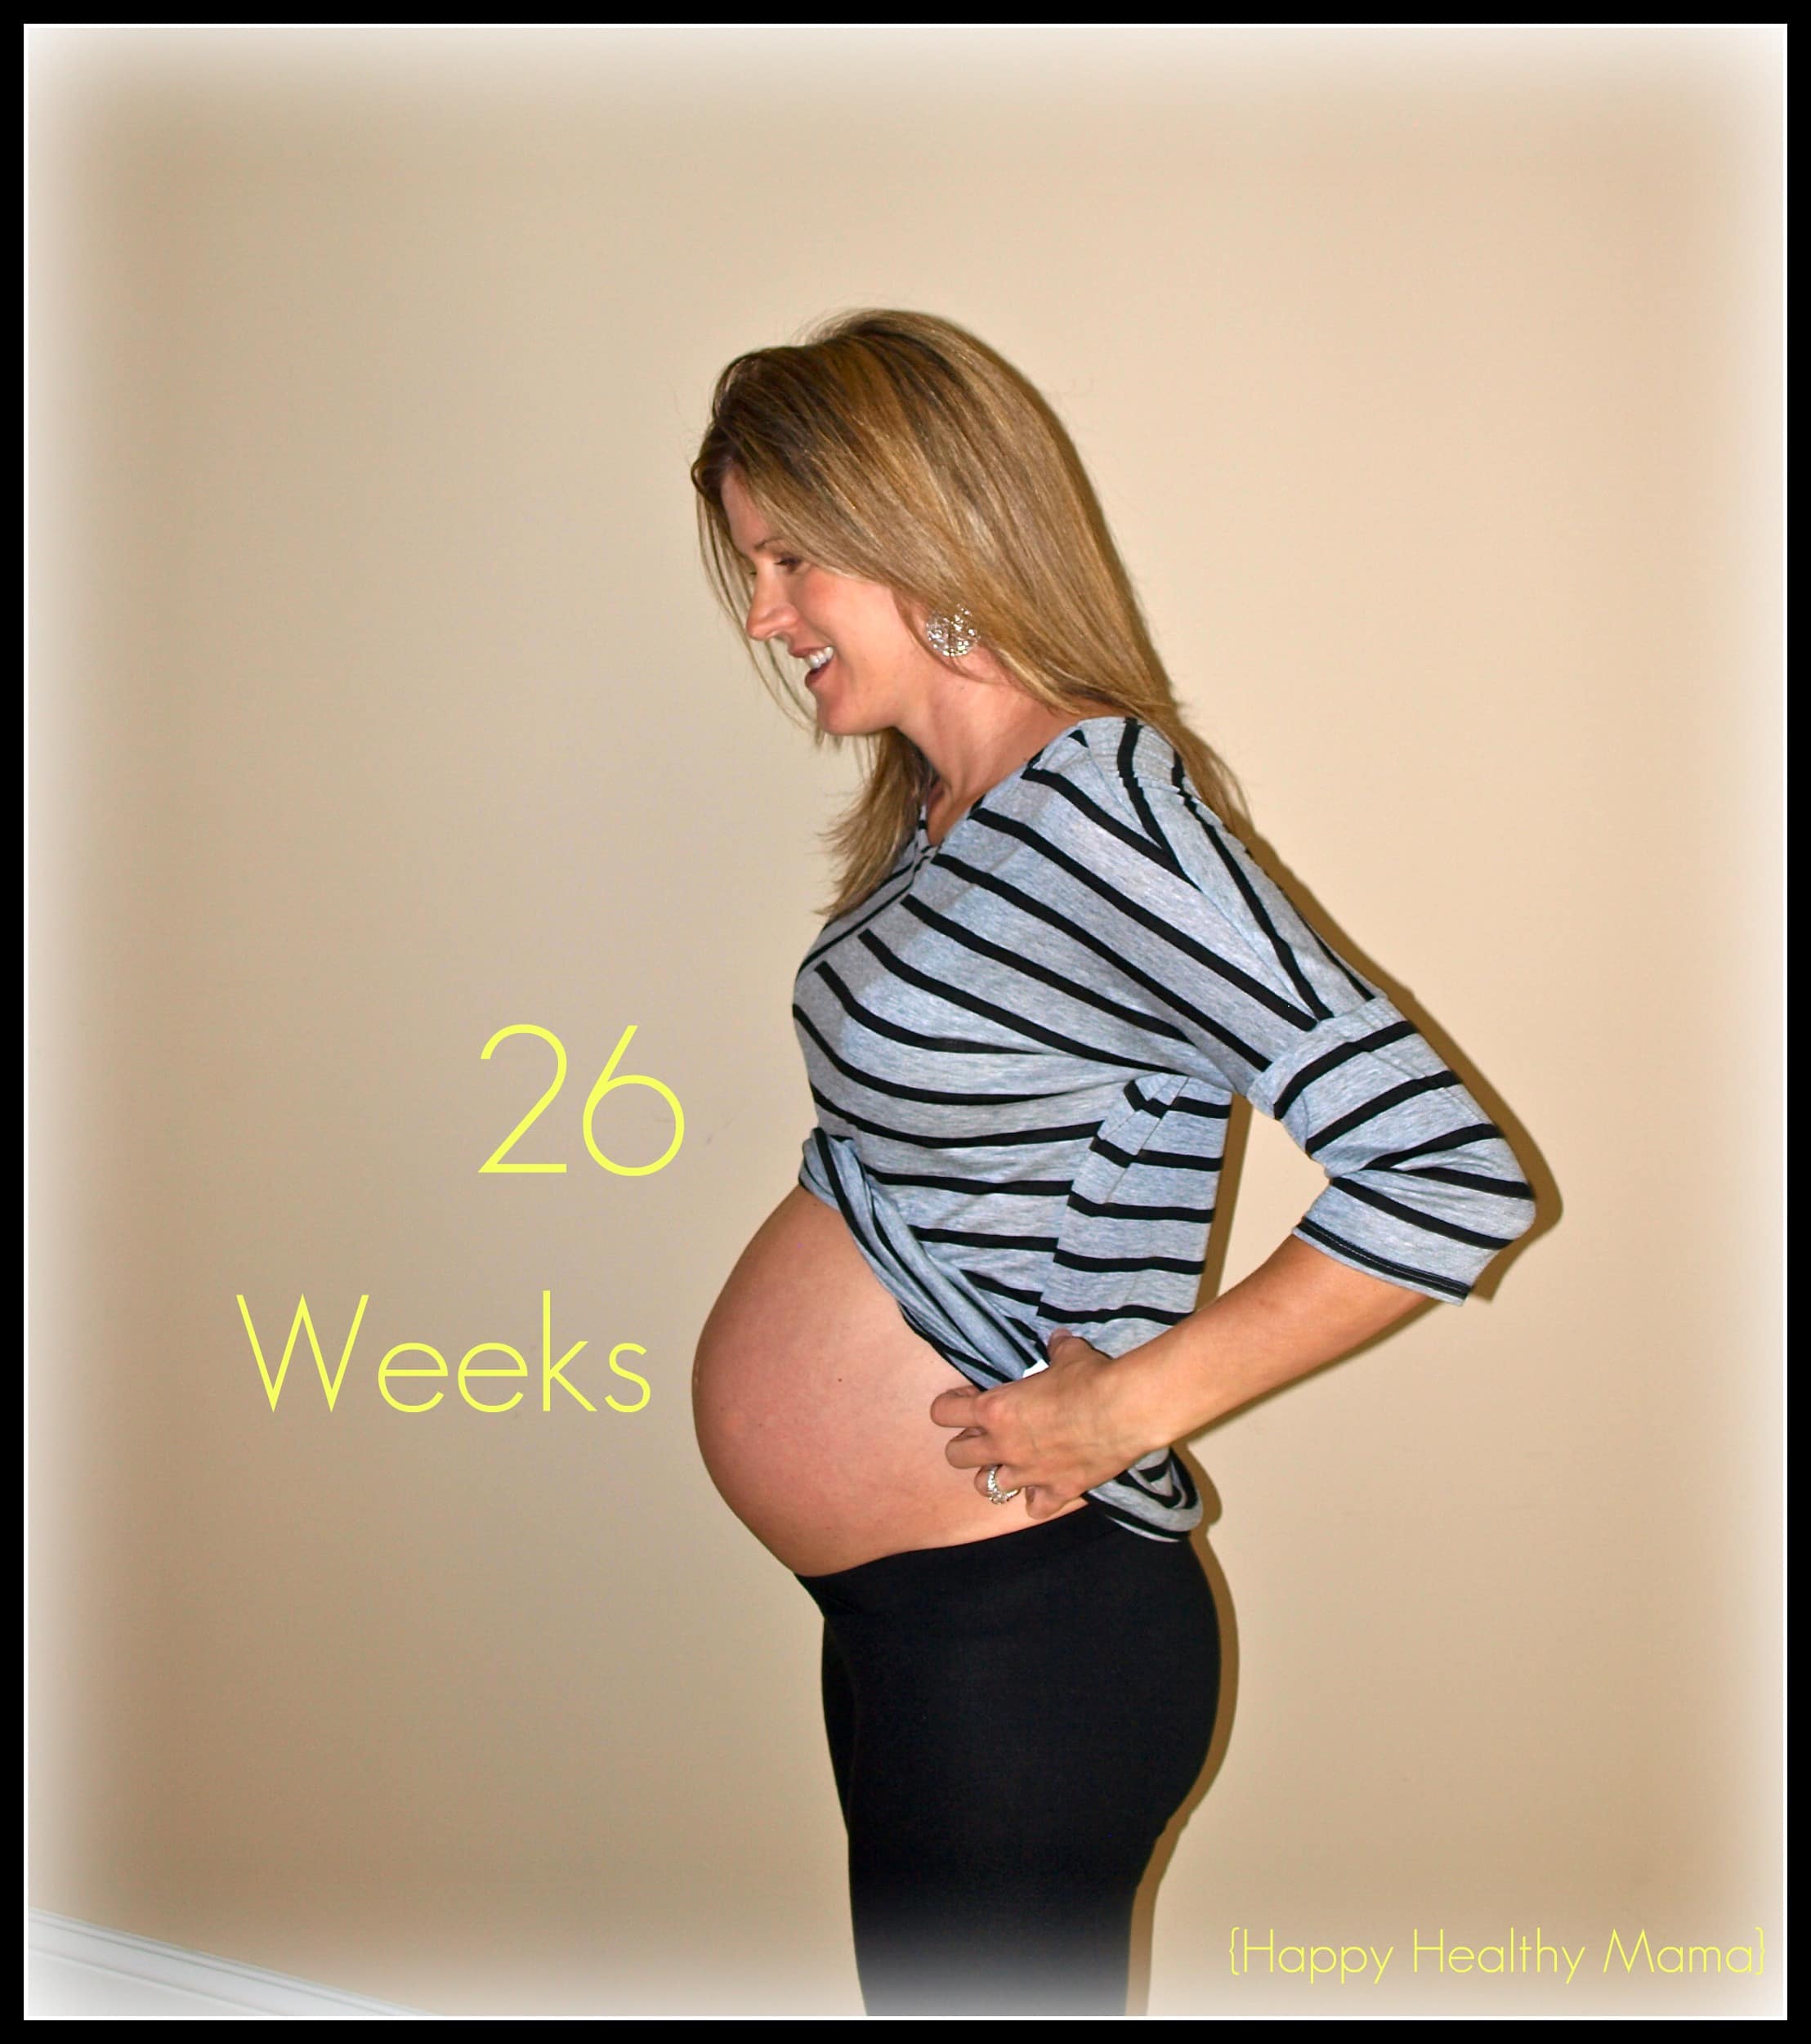 My pregnancy: 26 weeks - Happy Healthy Mama